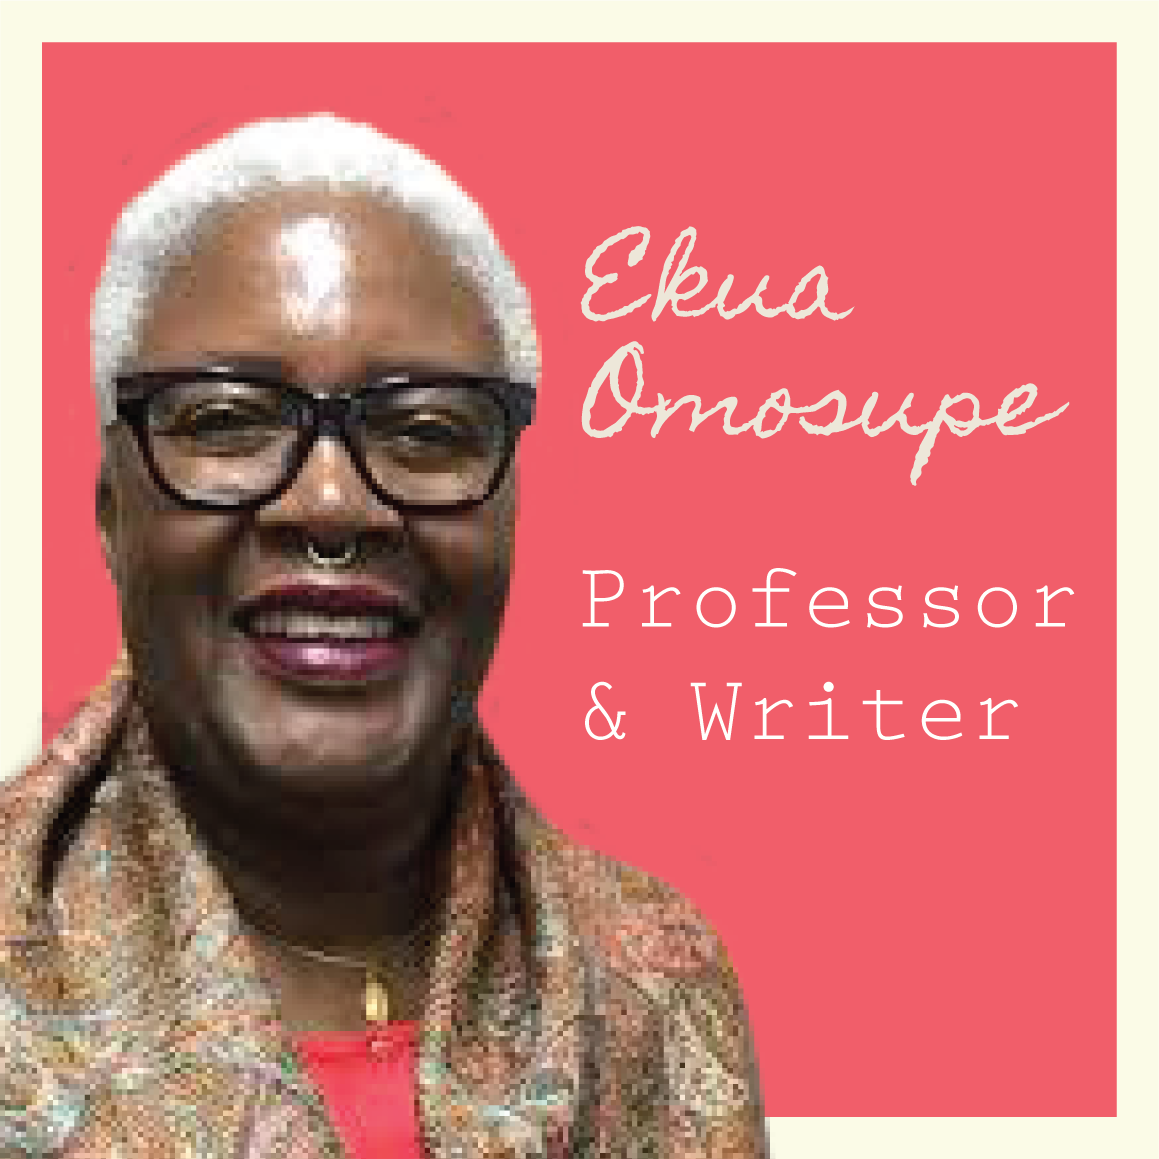 Ekua Omosupe: Professor & Writer